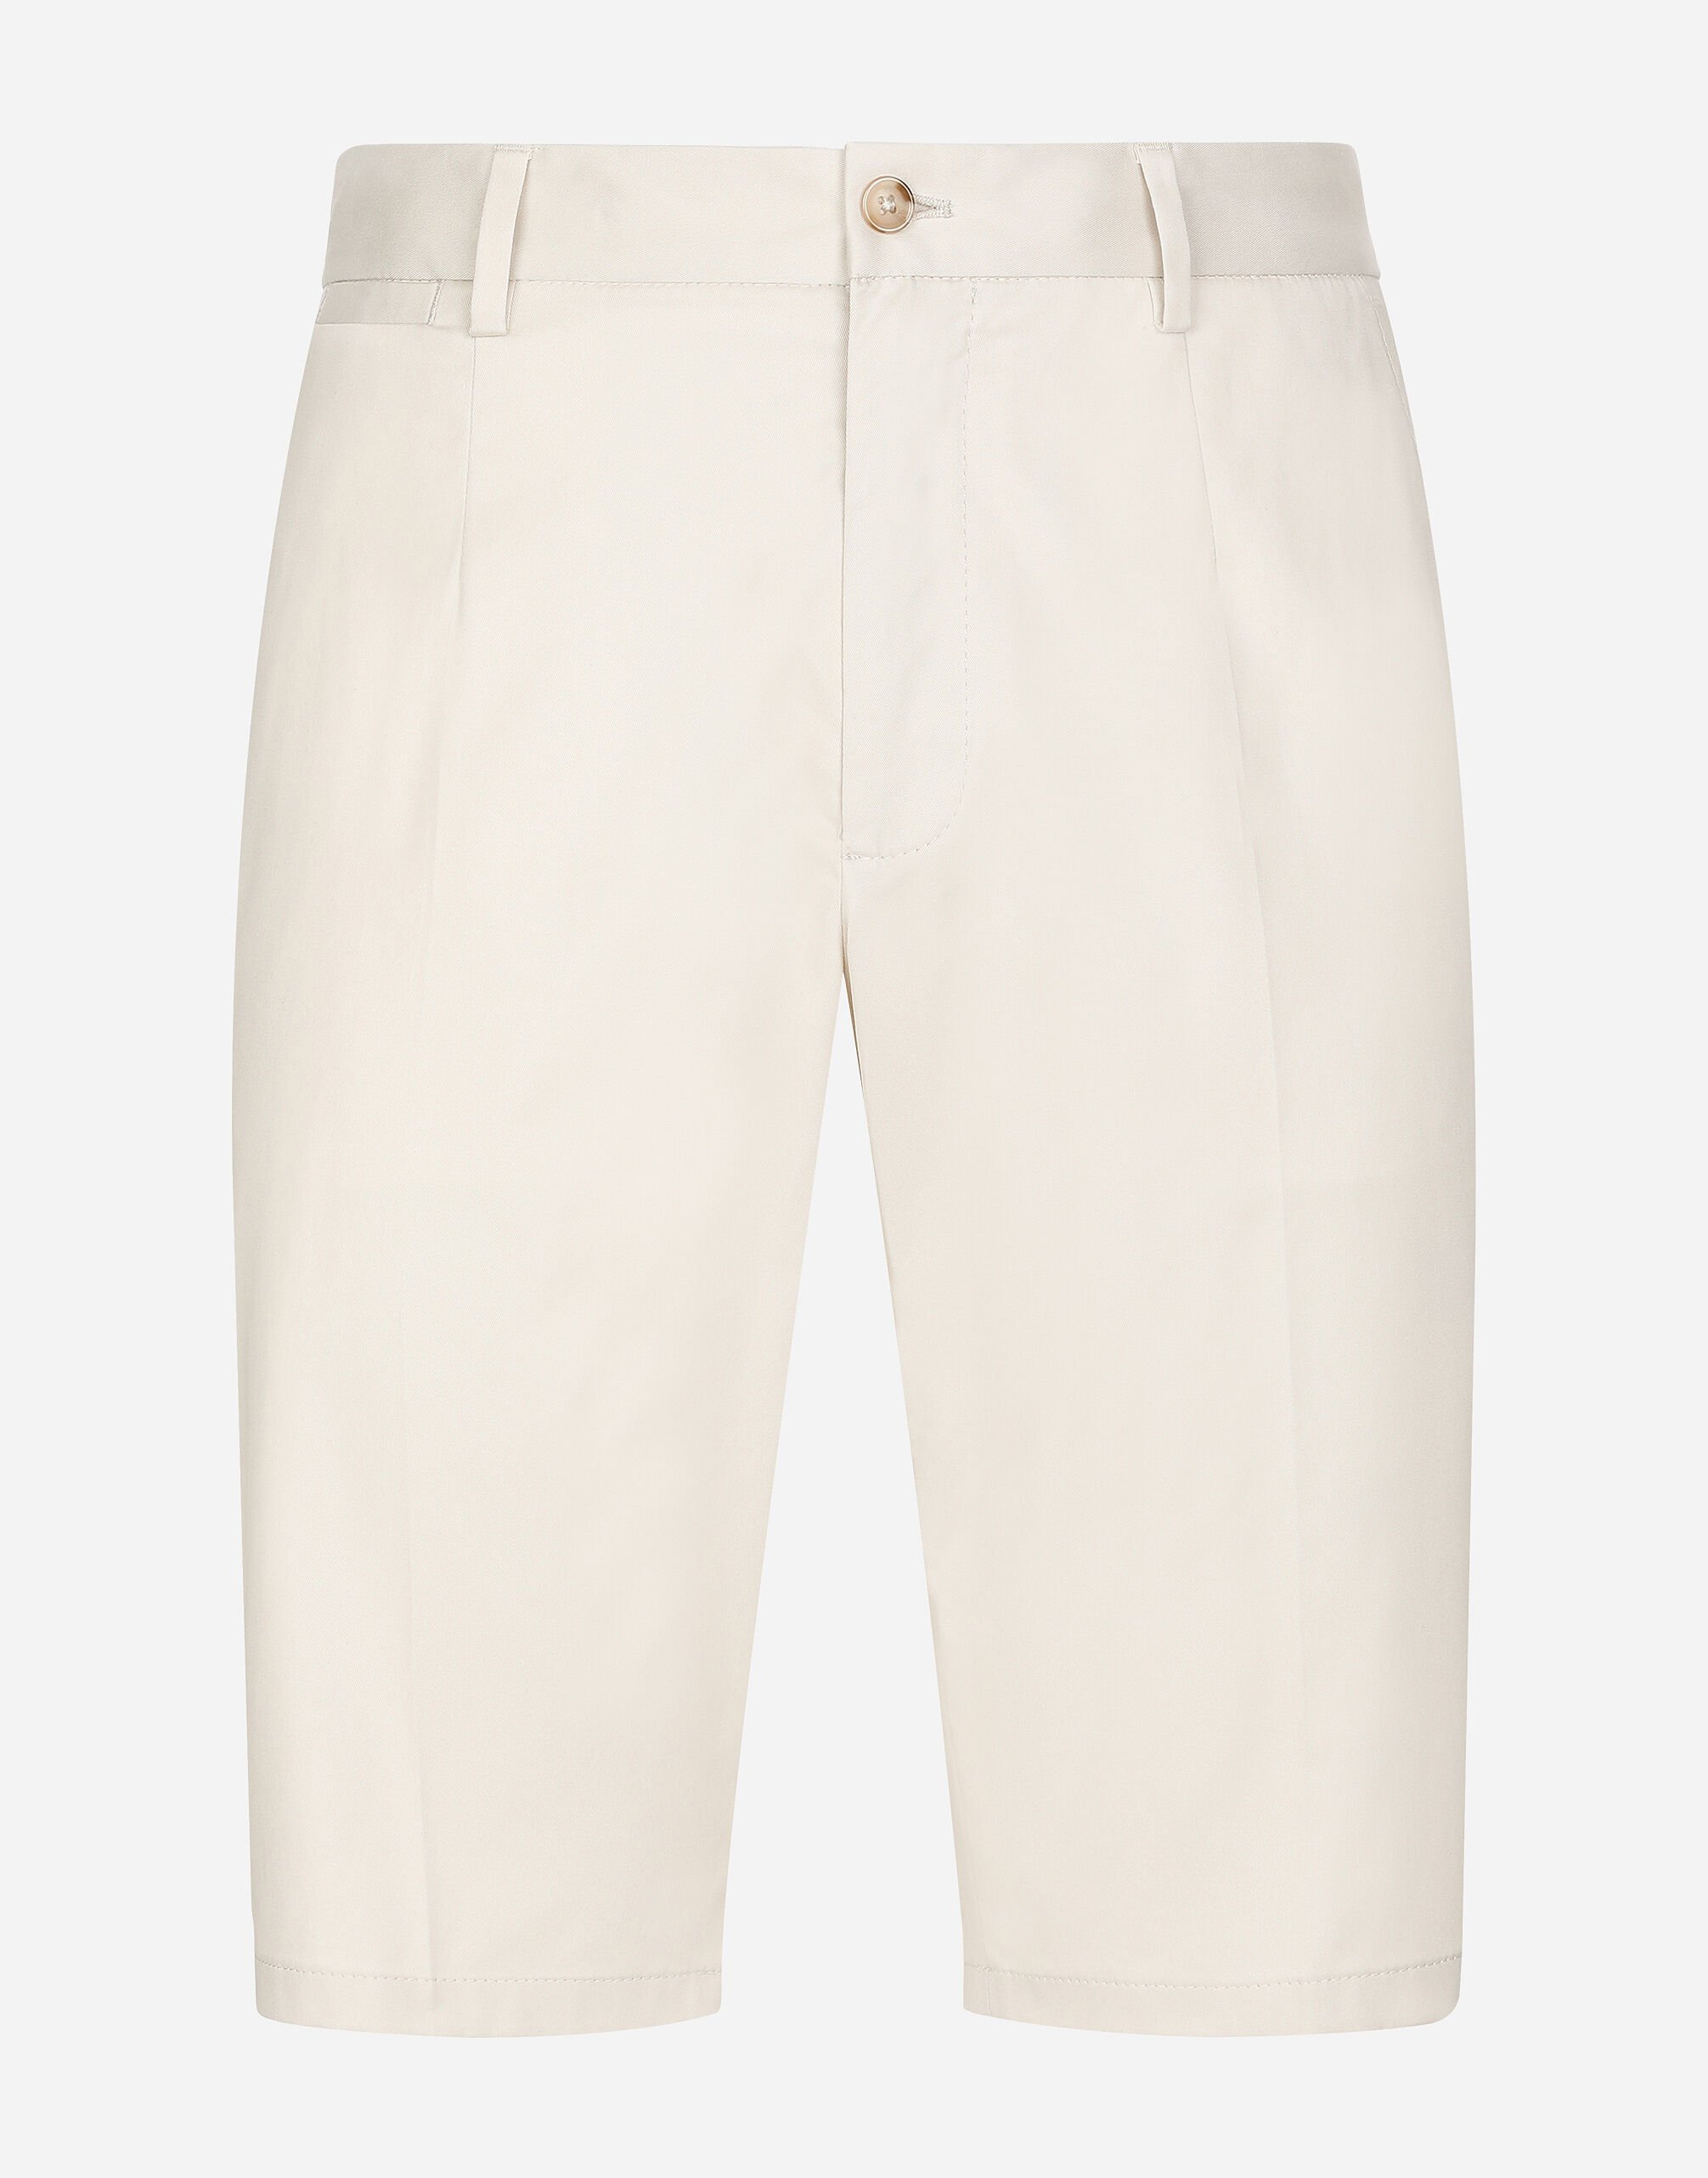 Dolce & Gabbana Stretch cotton shorts with DG patch Print GVCRATHI1QB